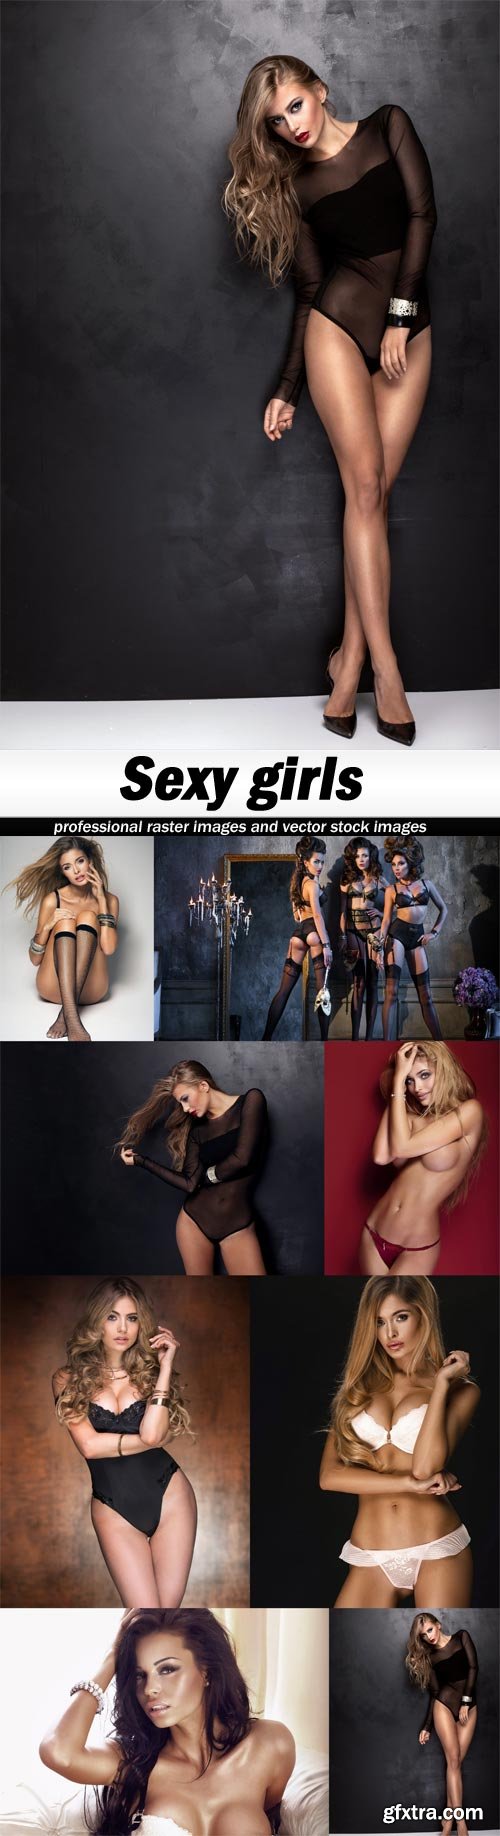 Sexy girls